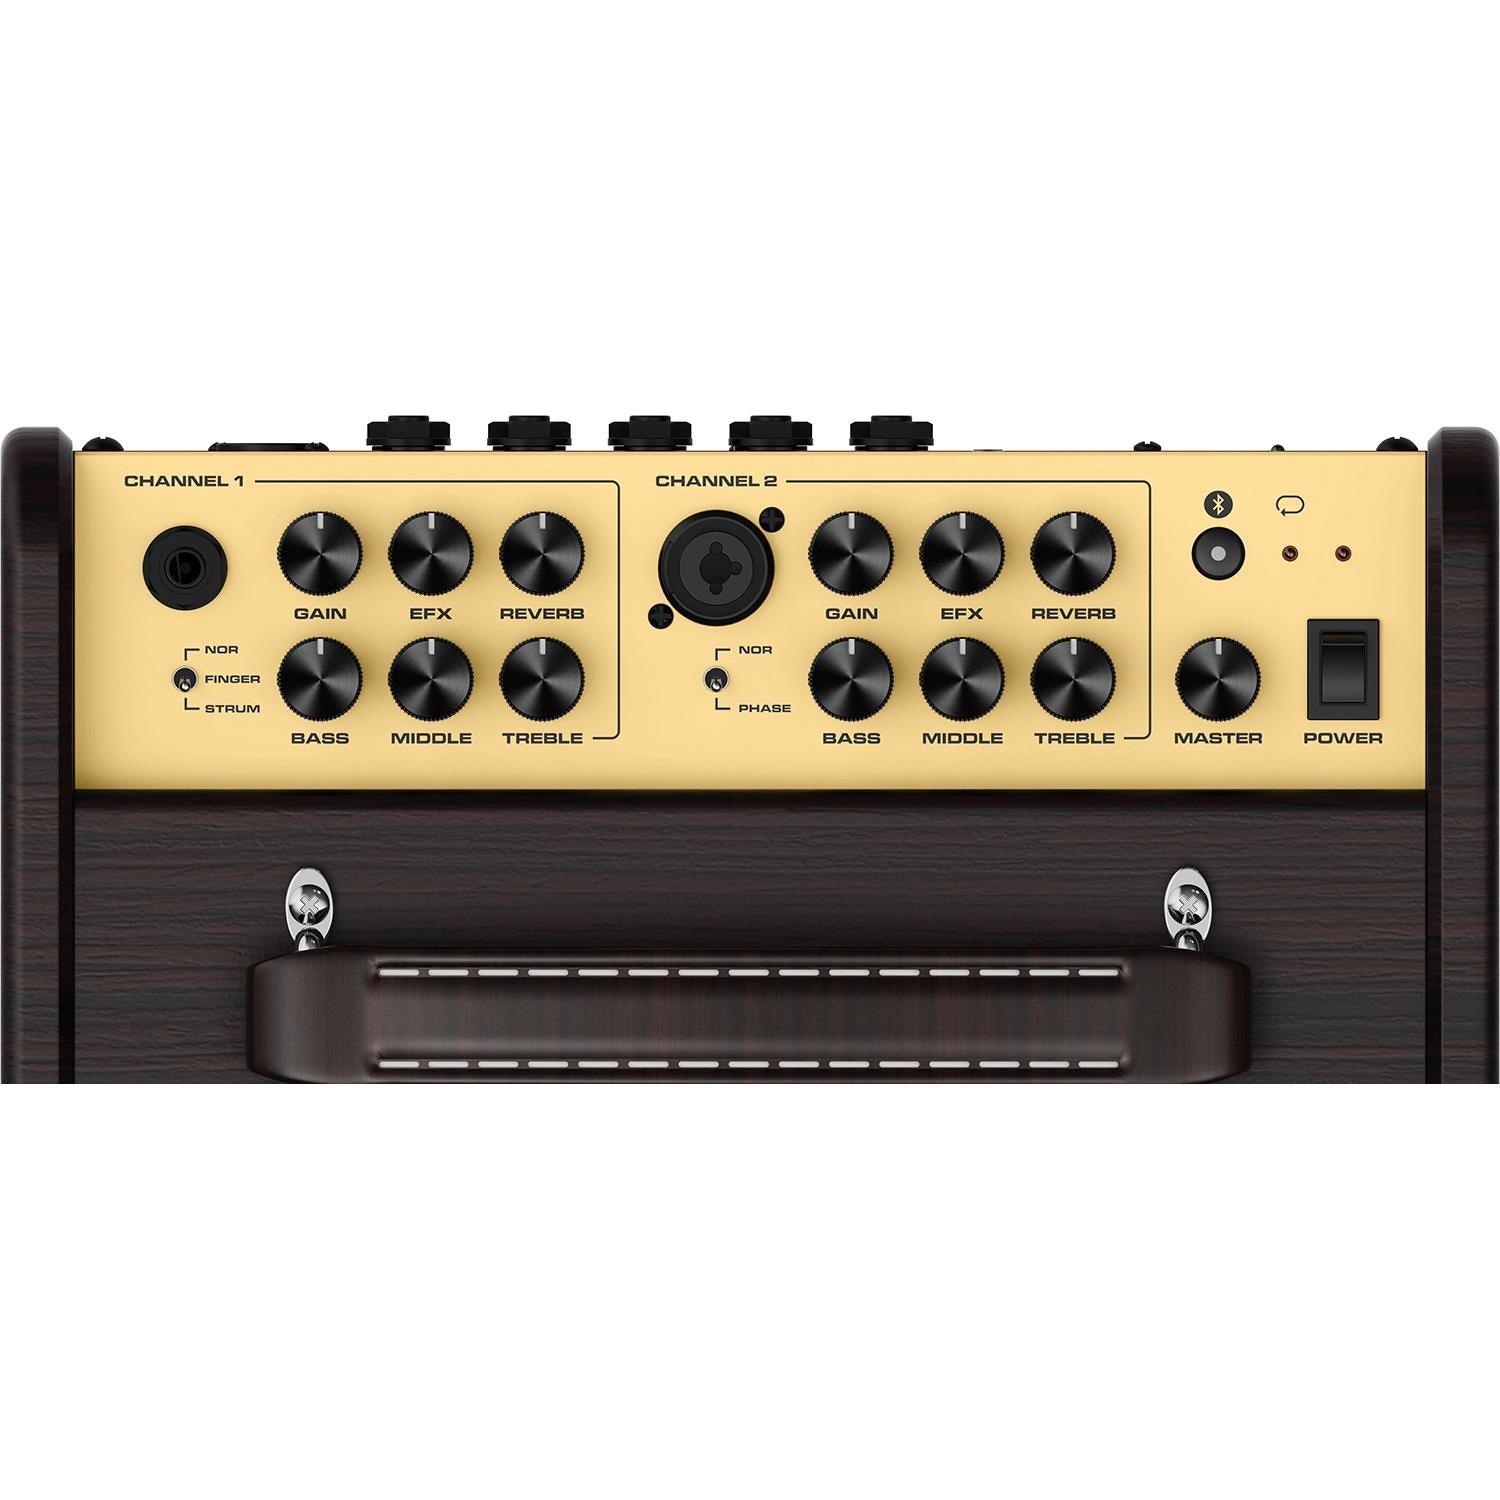 NuX Stageman II AC-80 Acoustic Amplifier - DY Pro Audio